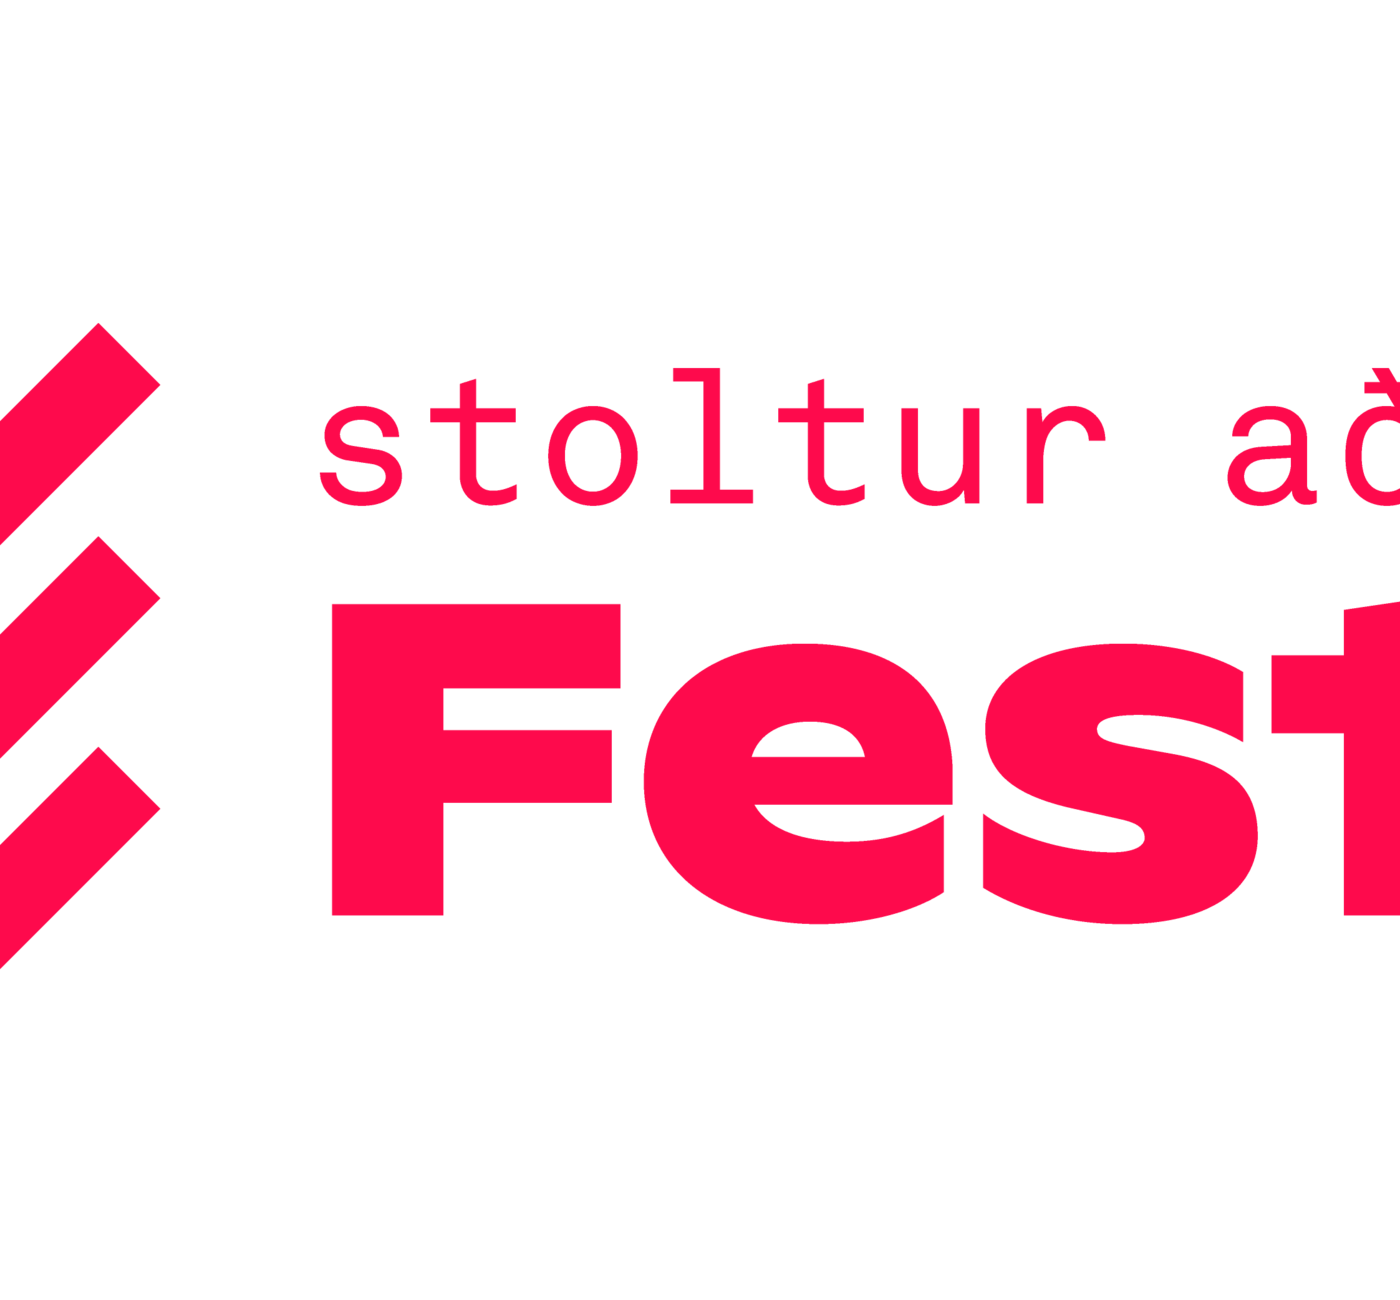 Festa_stoltur-adili_Red